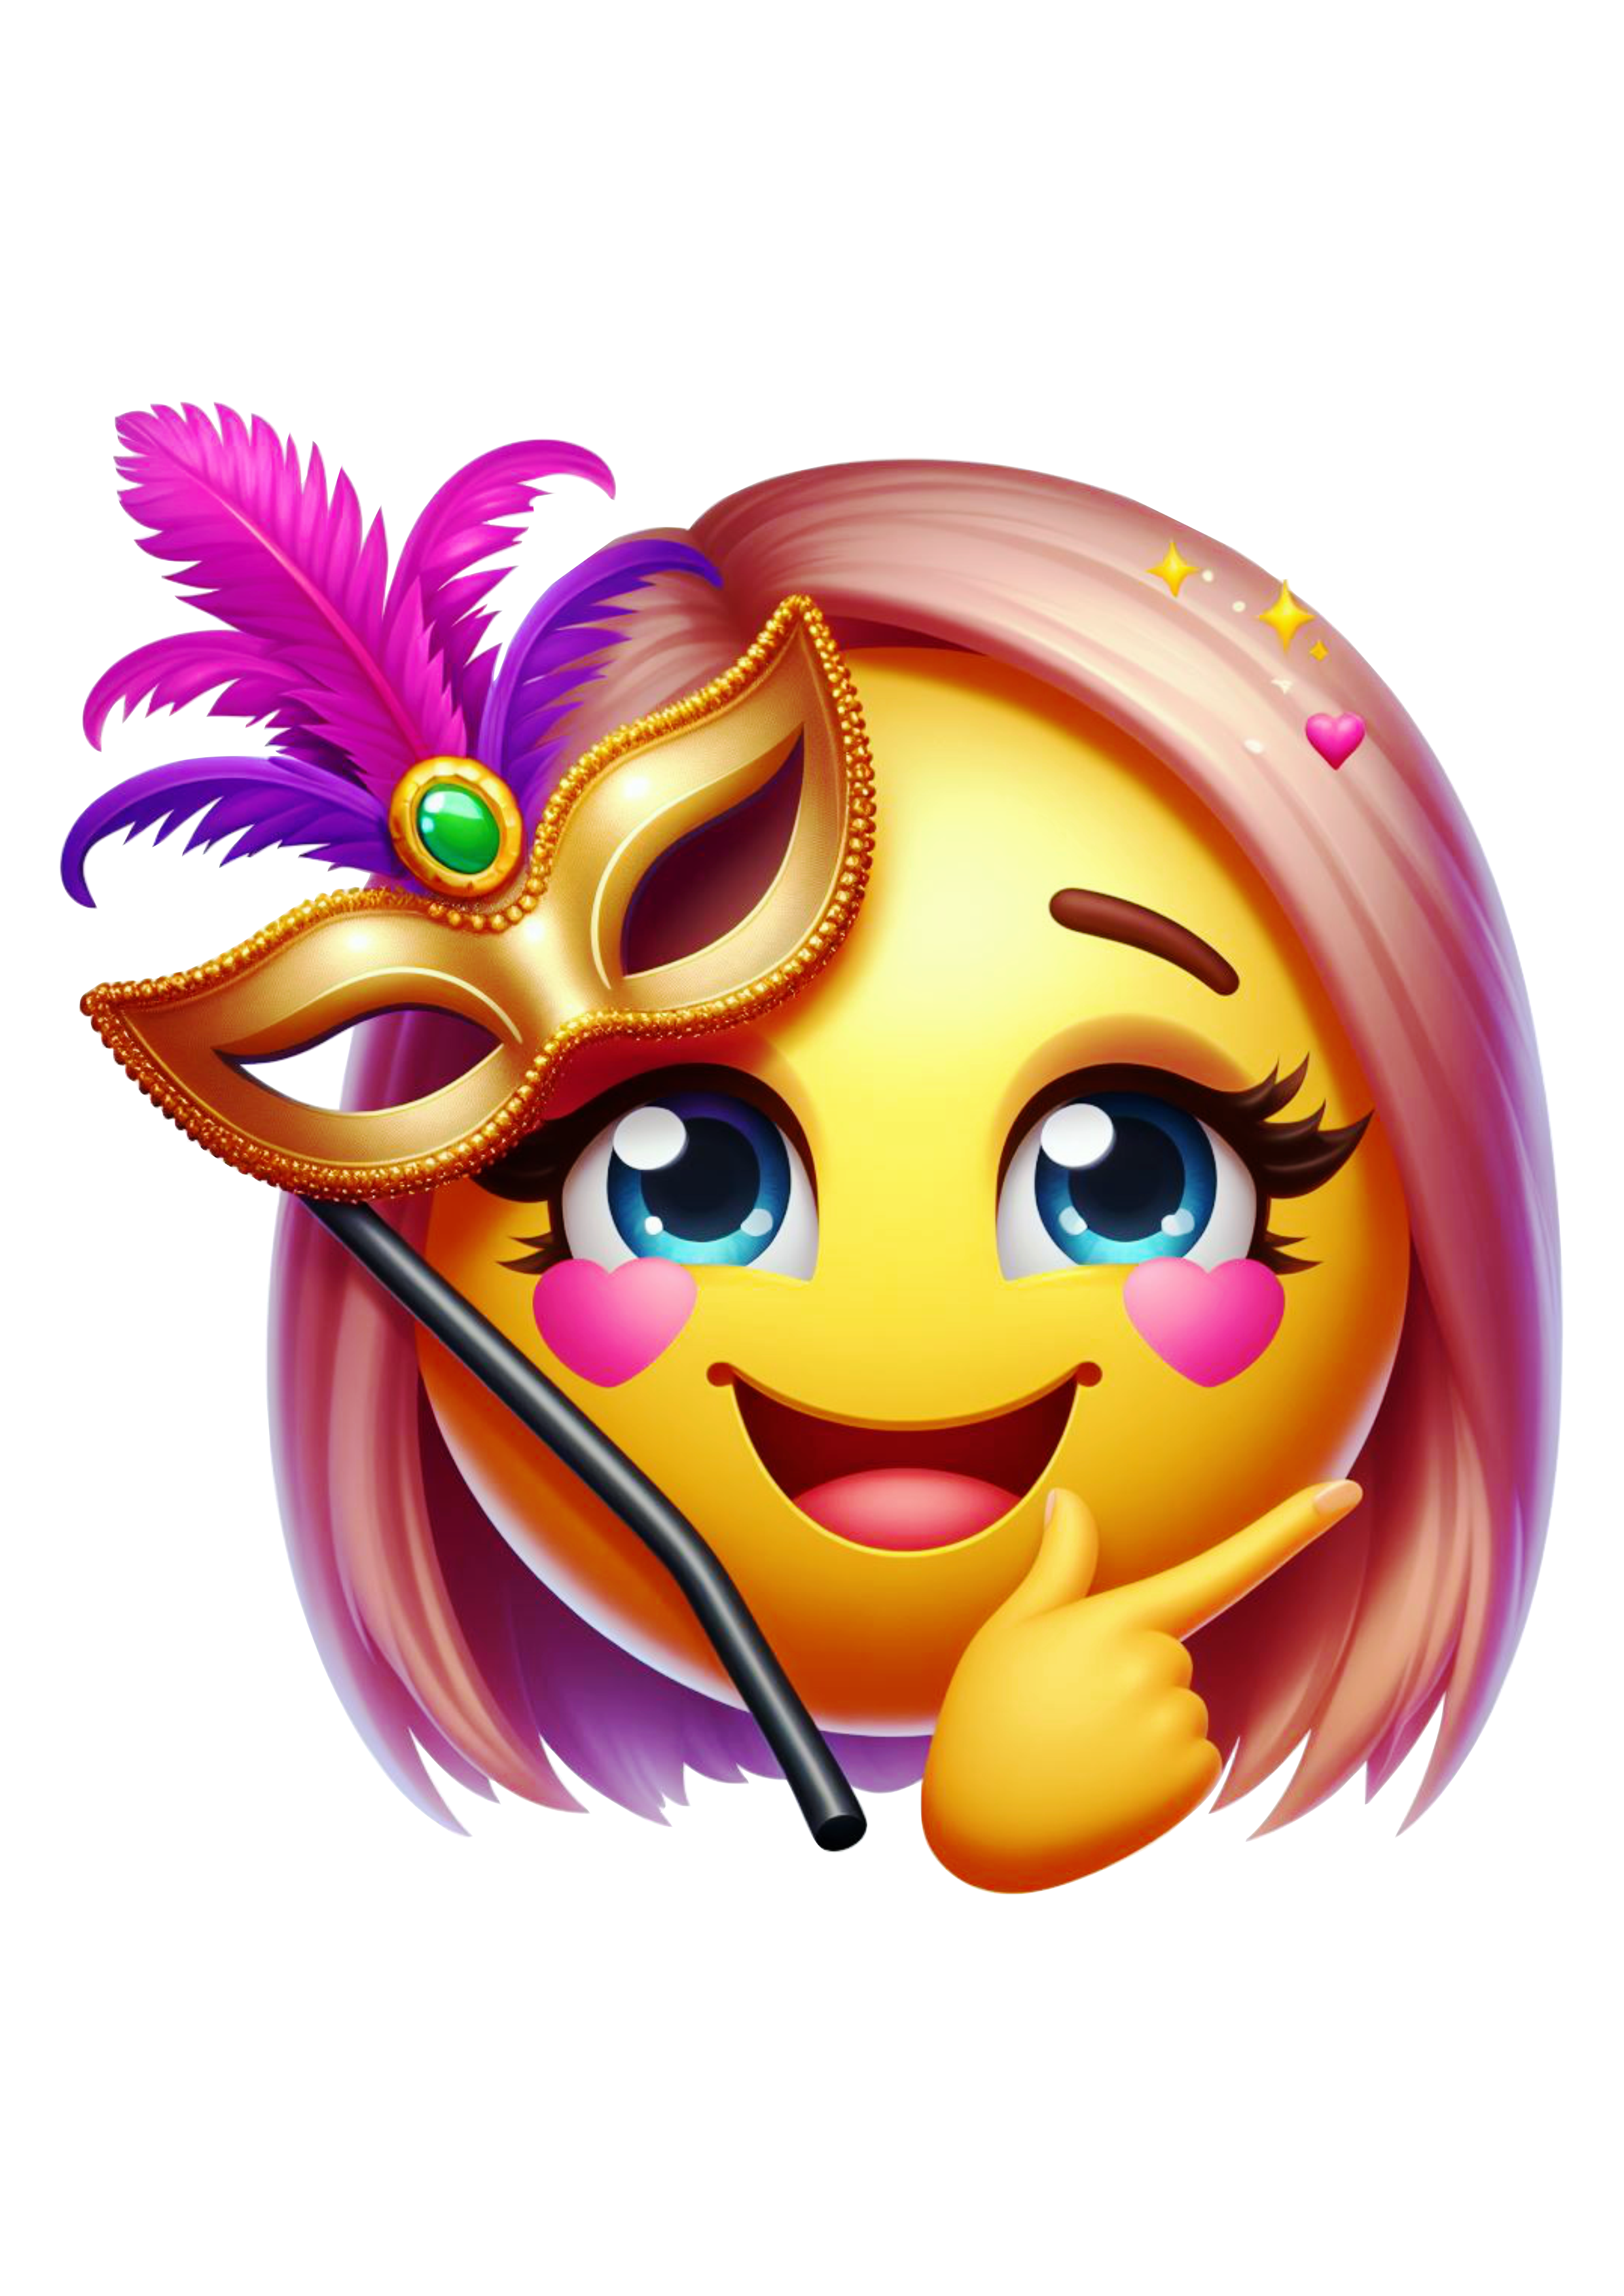 Carnaval emoji feminino para whatsapp instagram e facebook máscara de carnaval menina bonita png